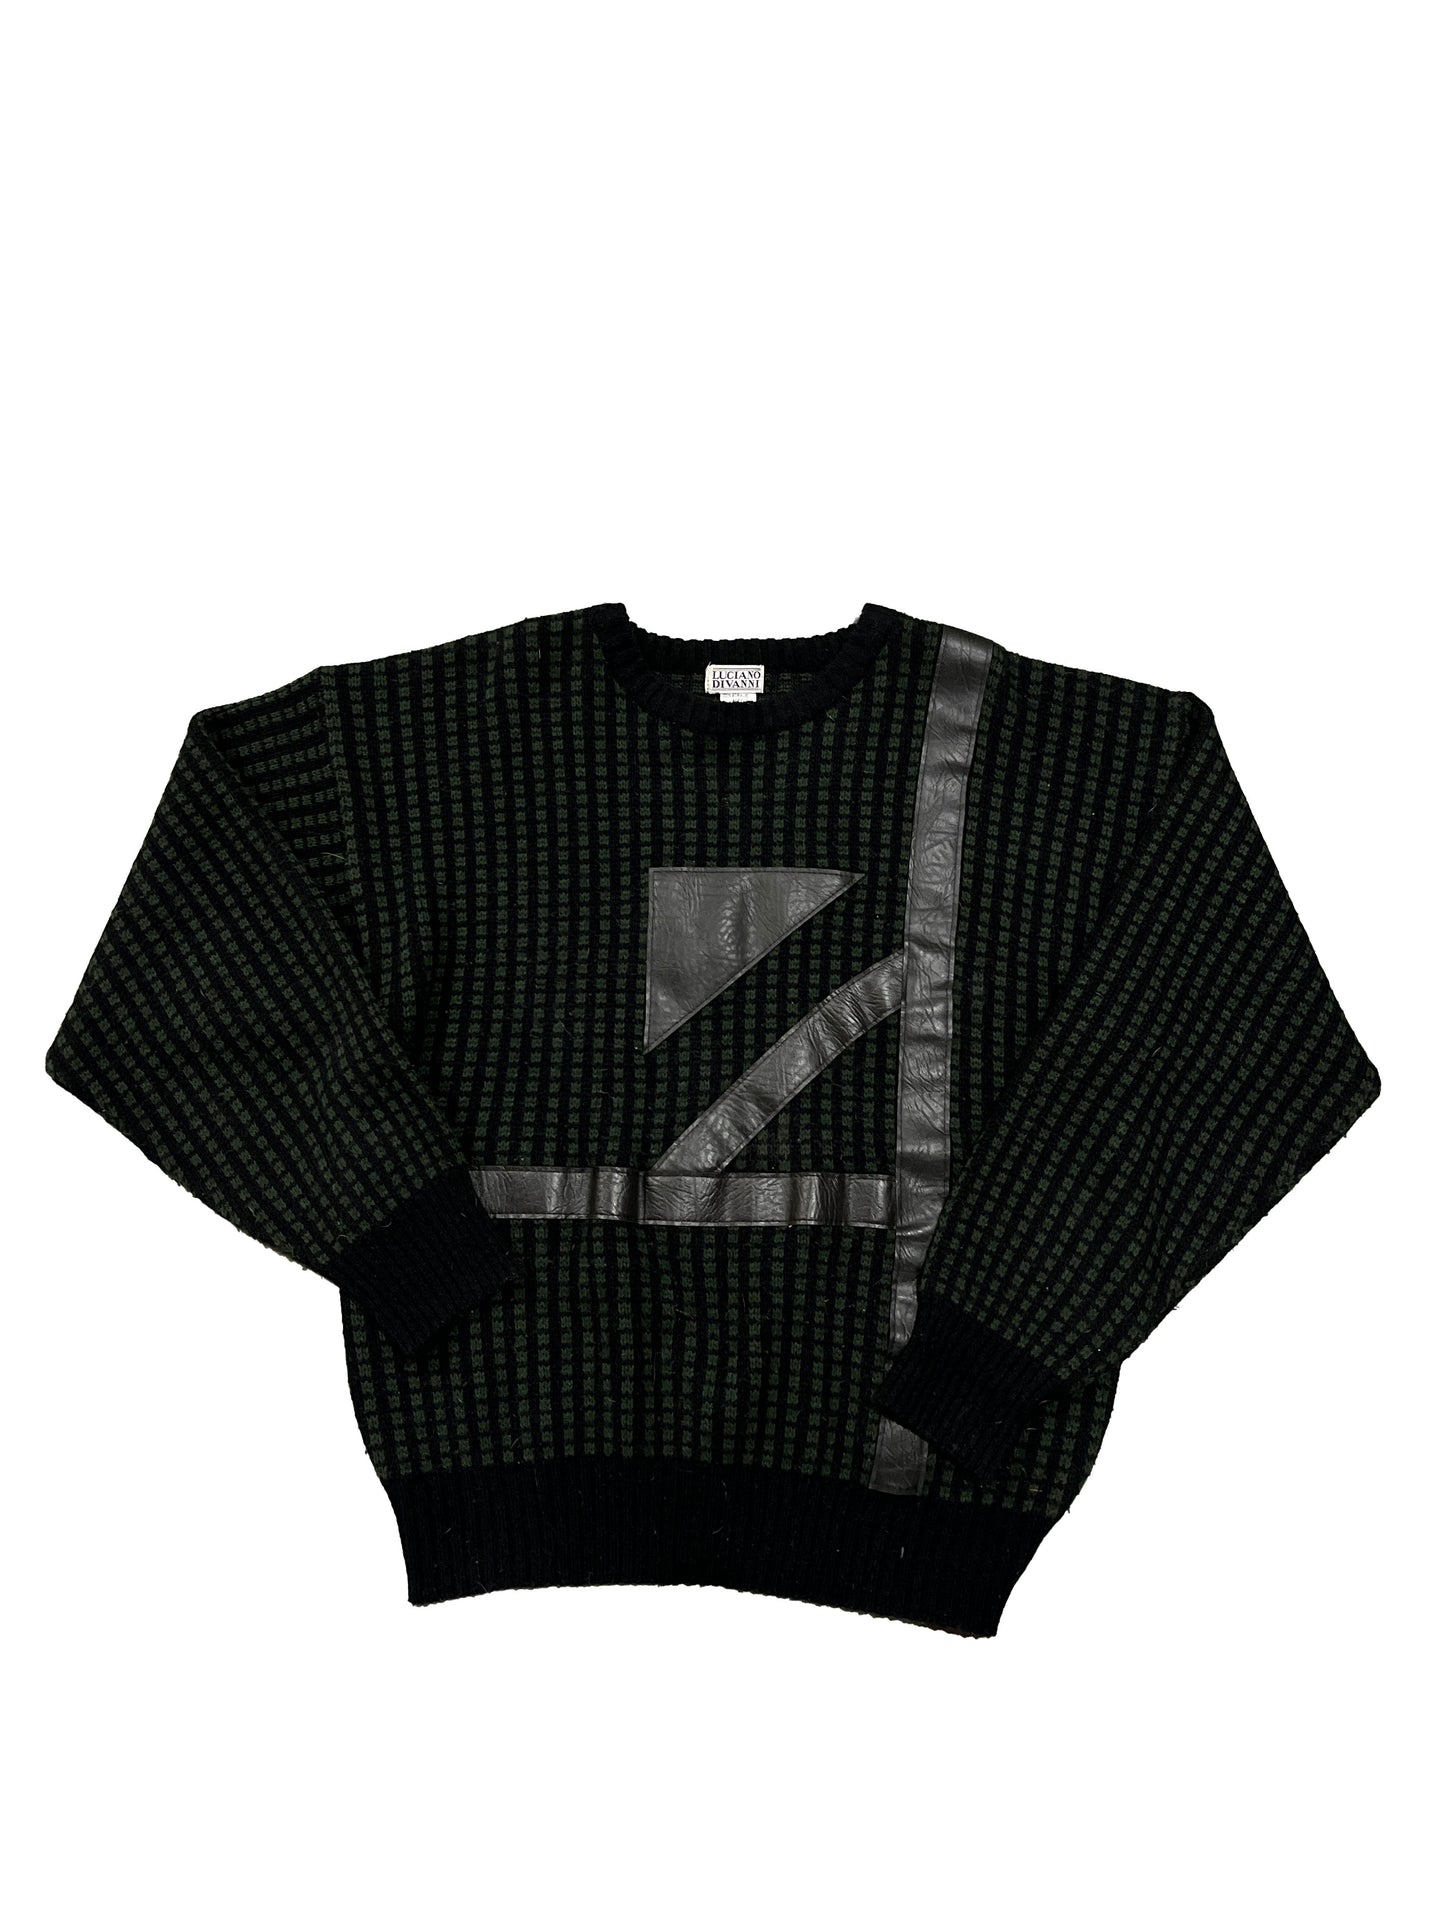 Vintage "Luciano Divanni" Knit Sweater